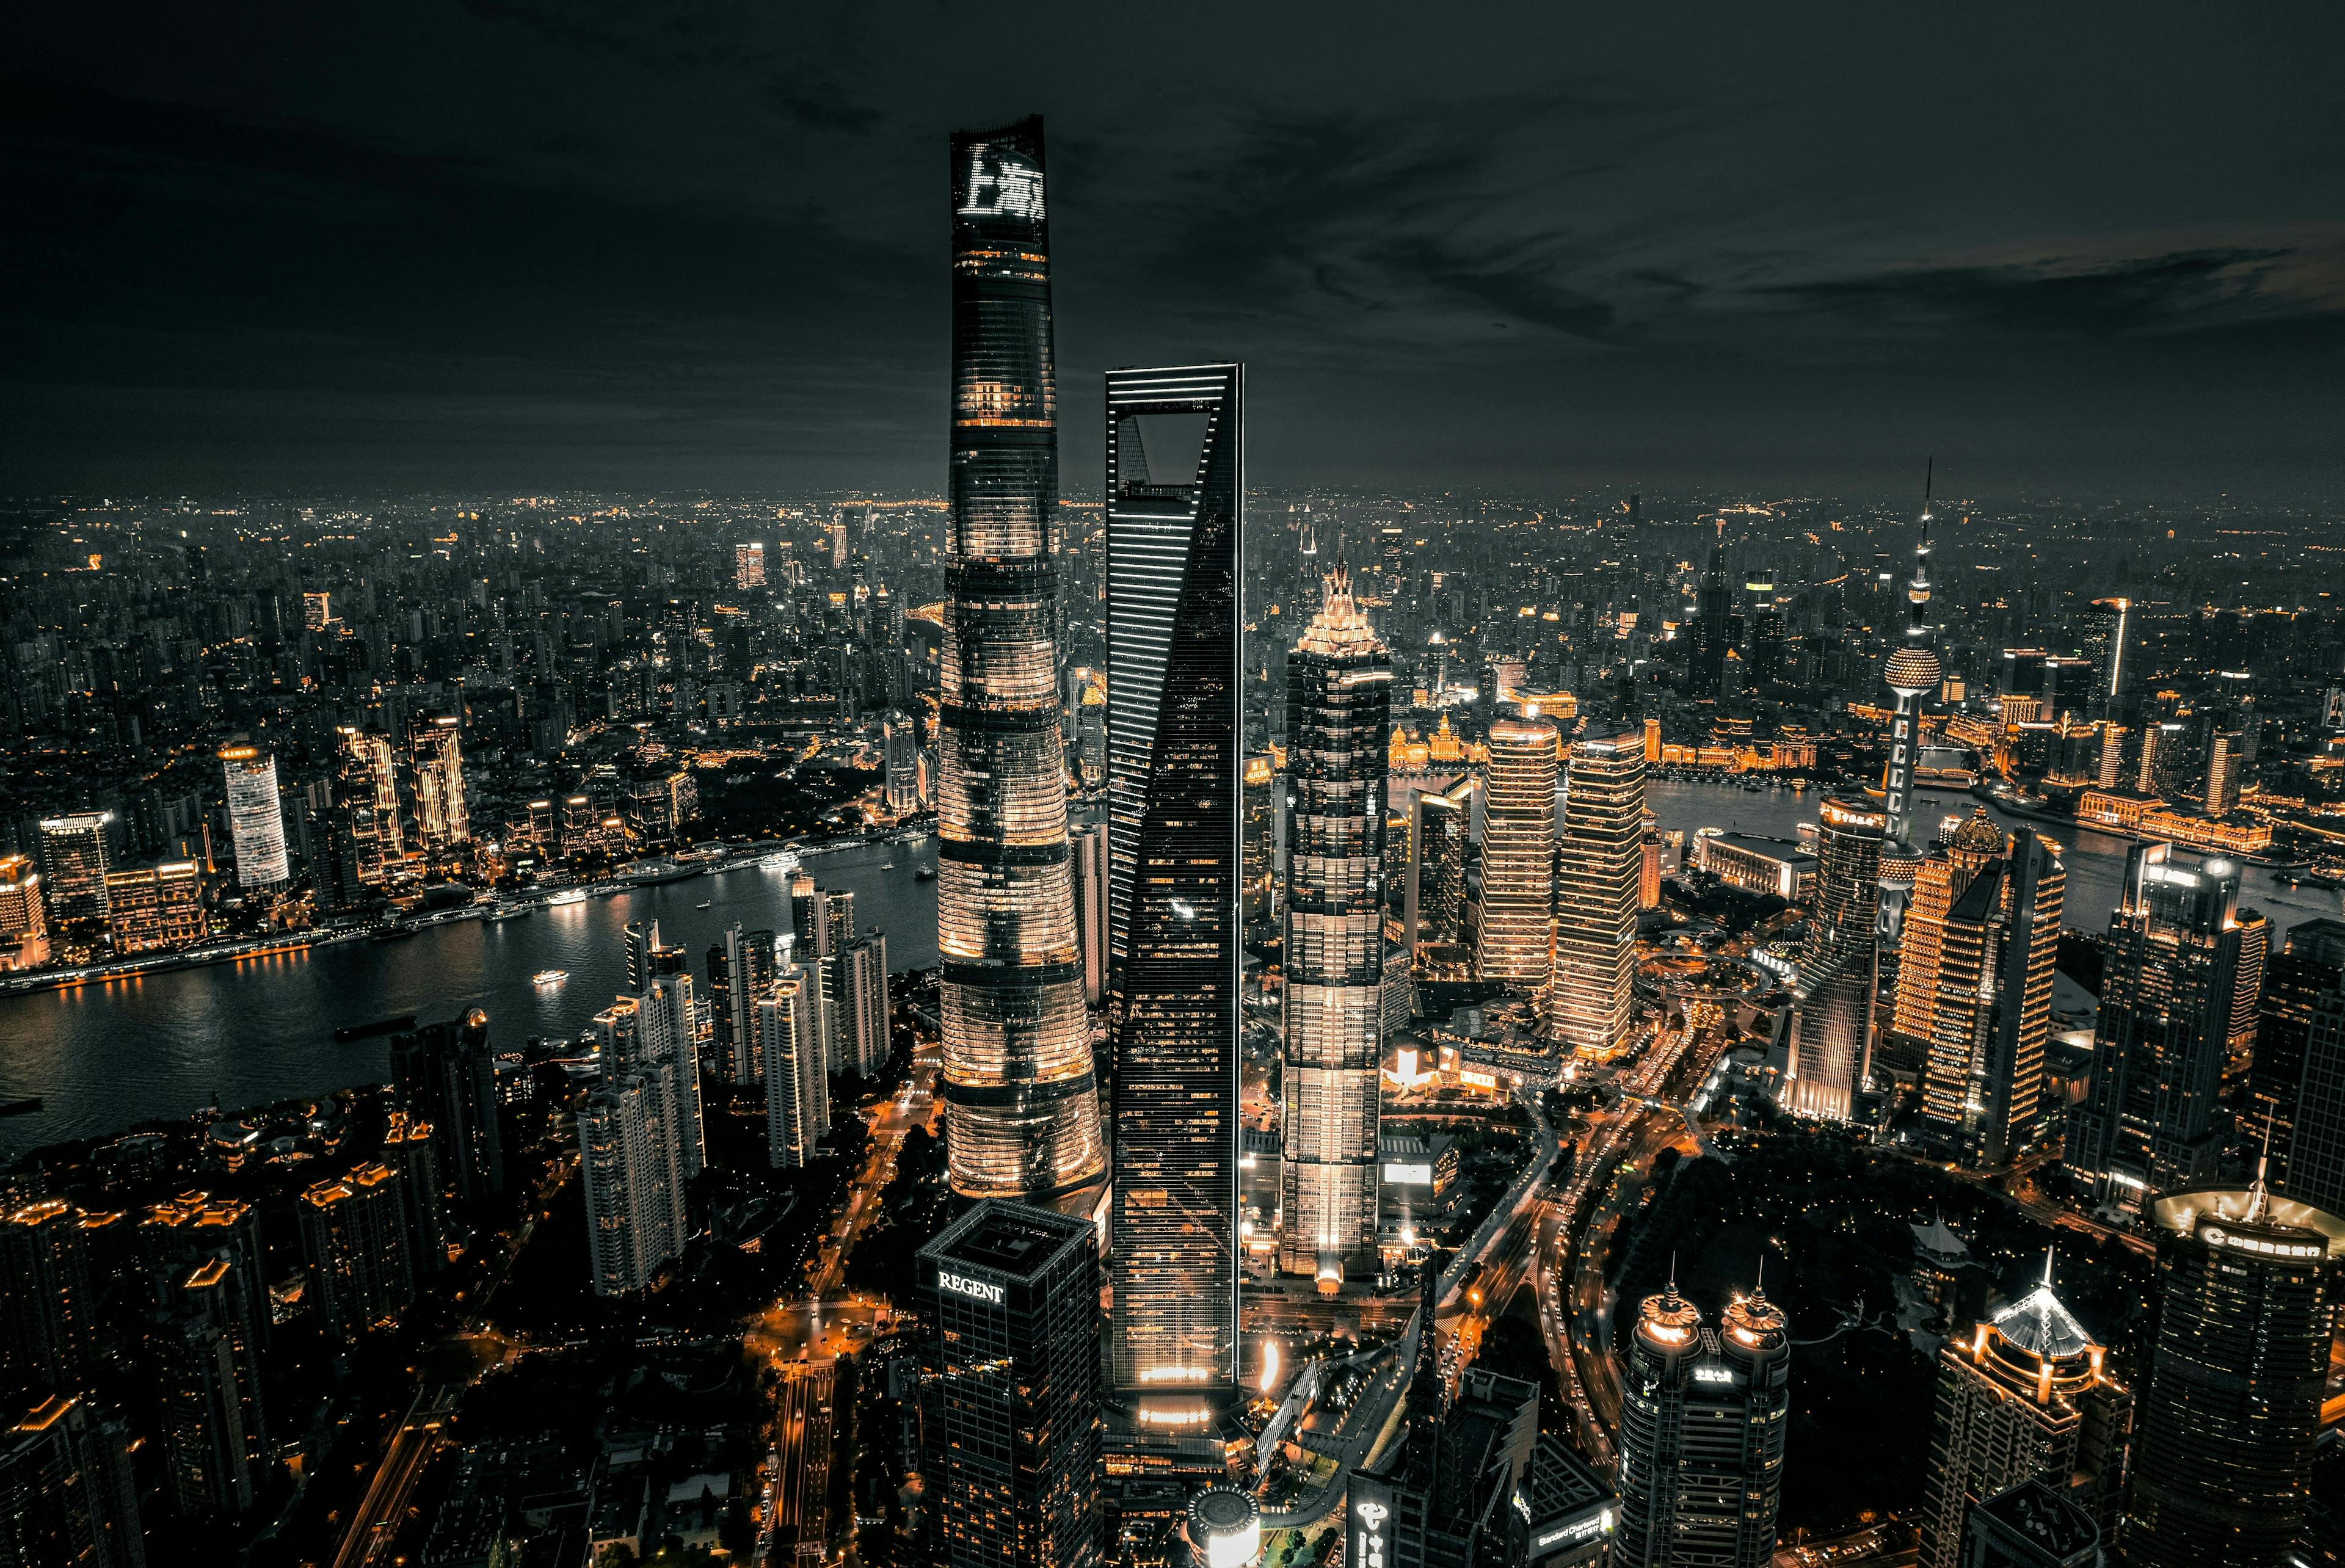 Shanghai skyline during night